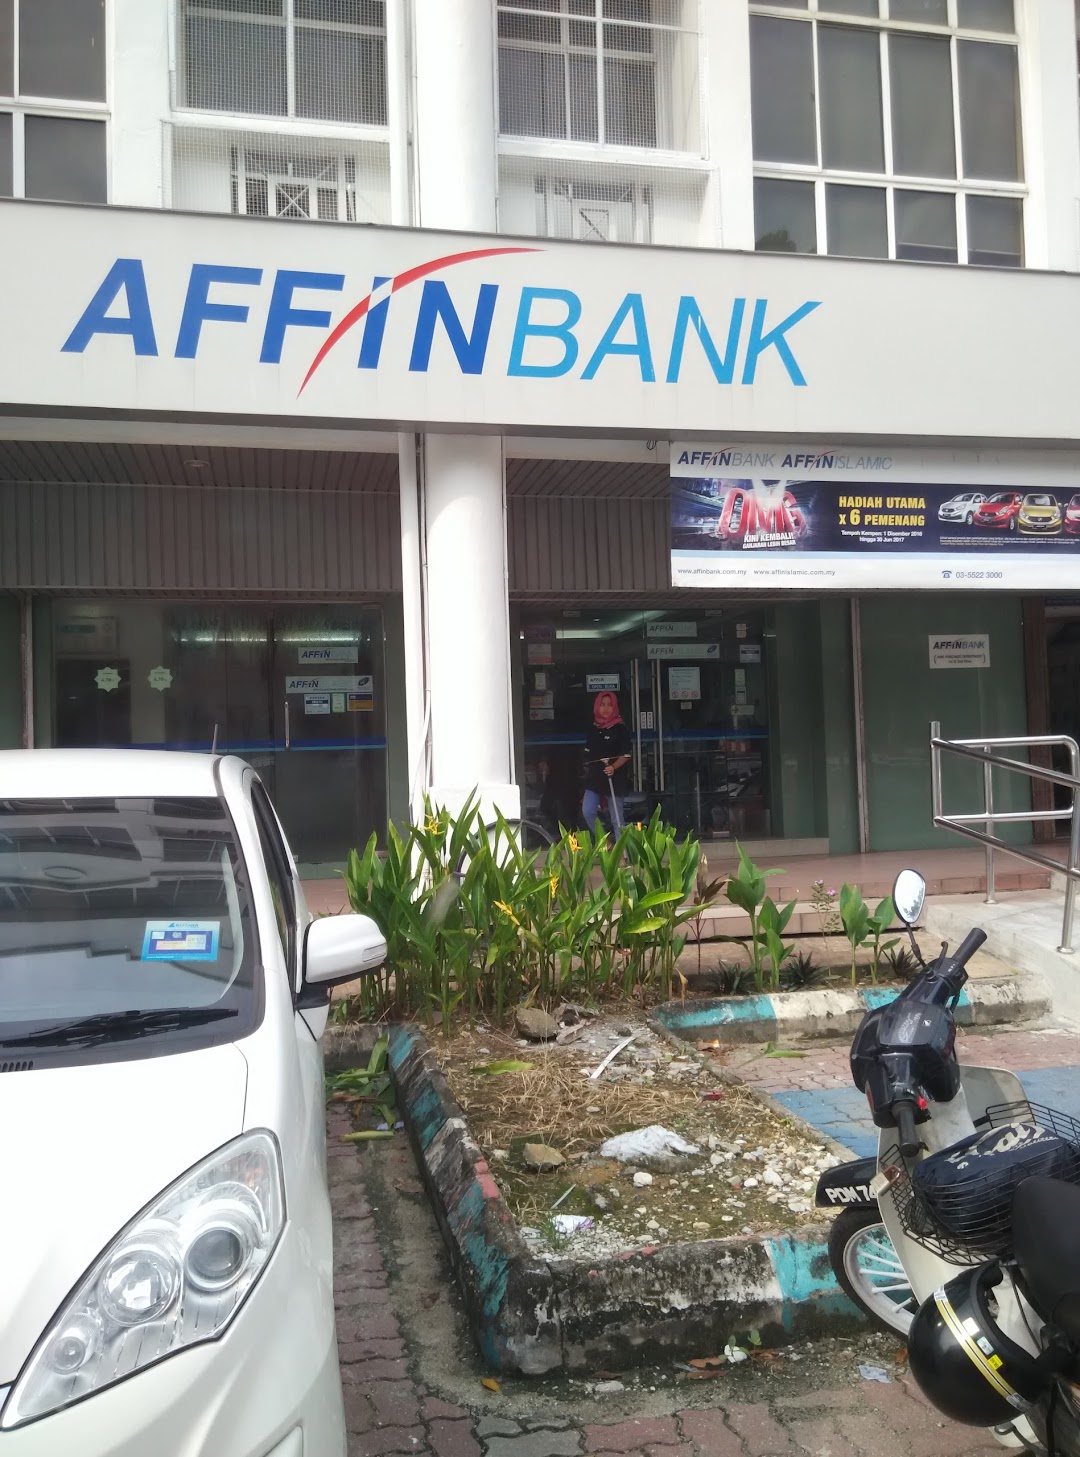 Affin Bank Bandar Baru Klang